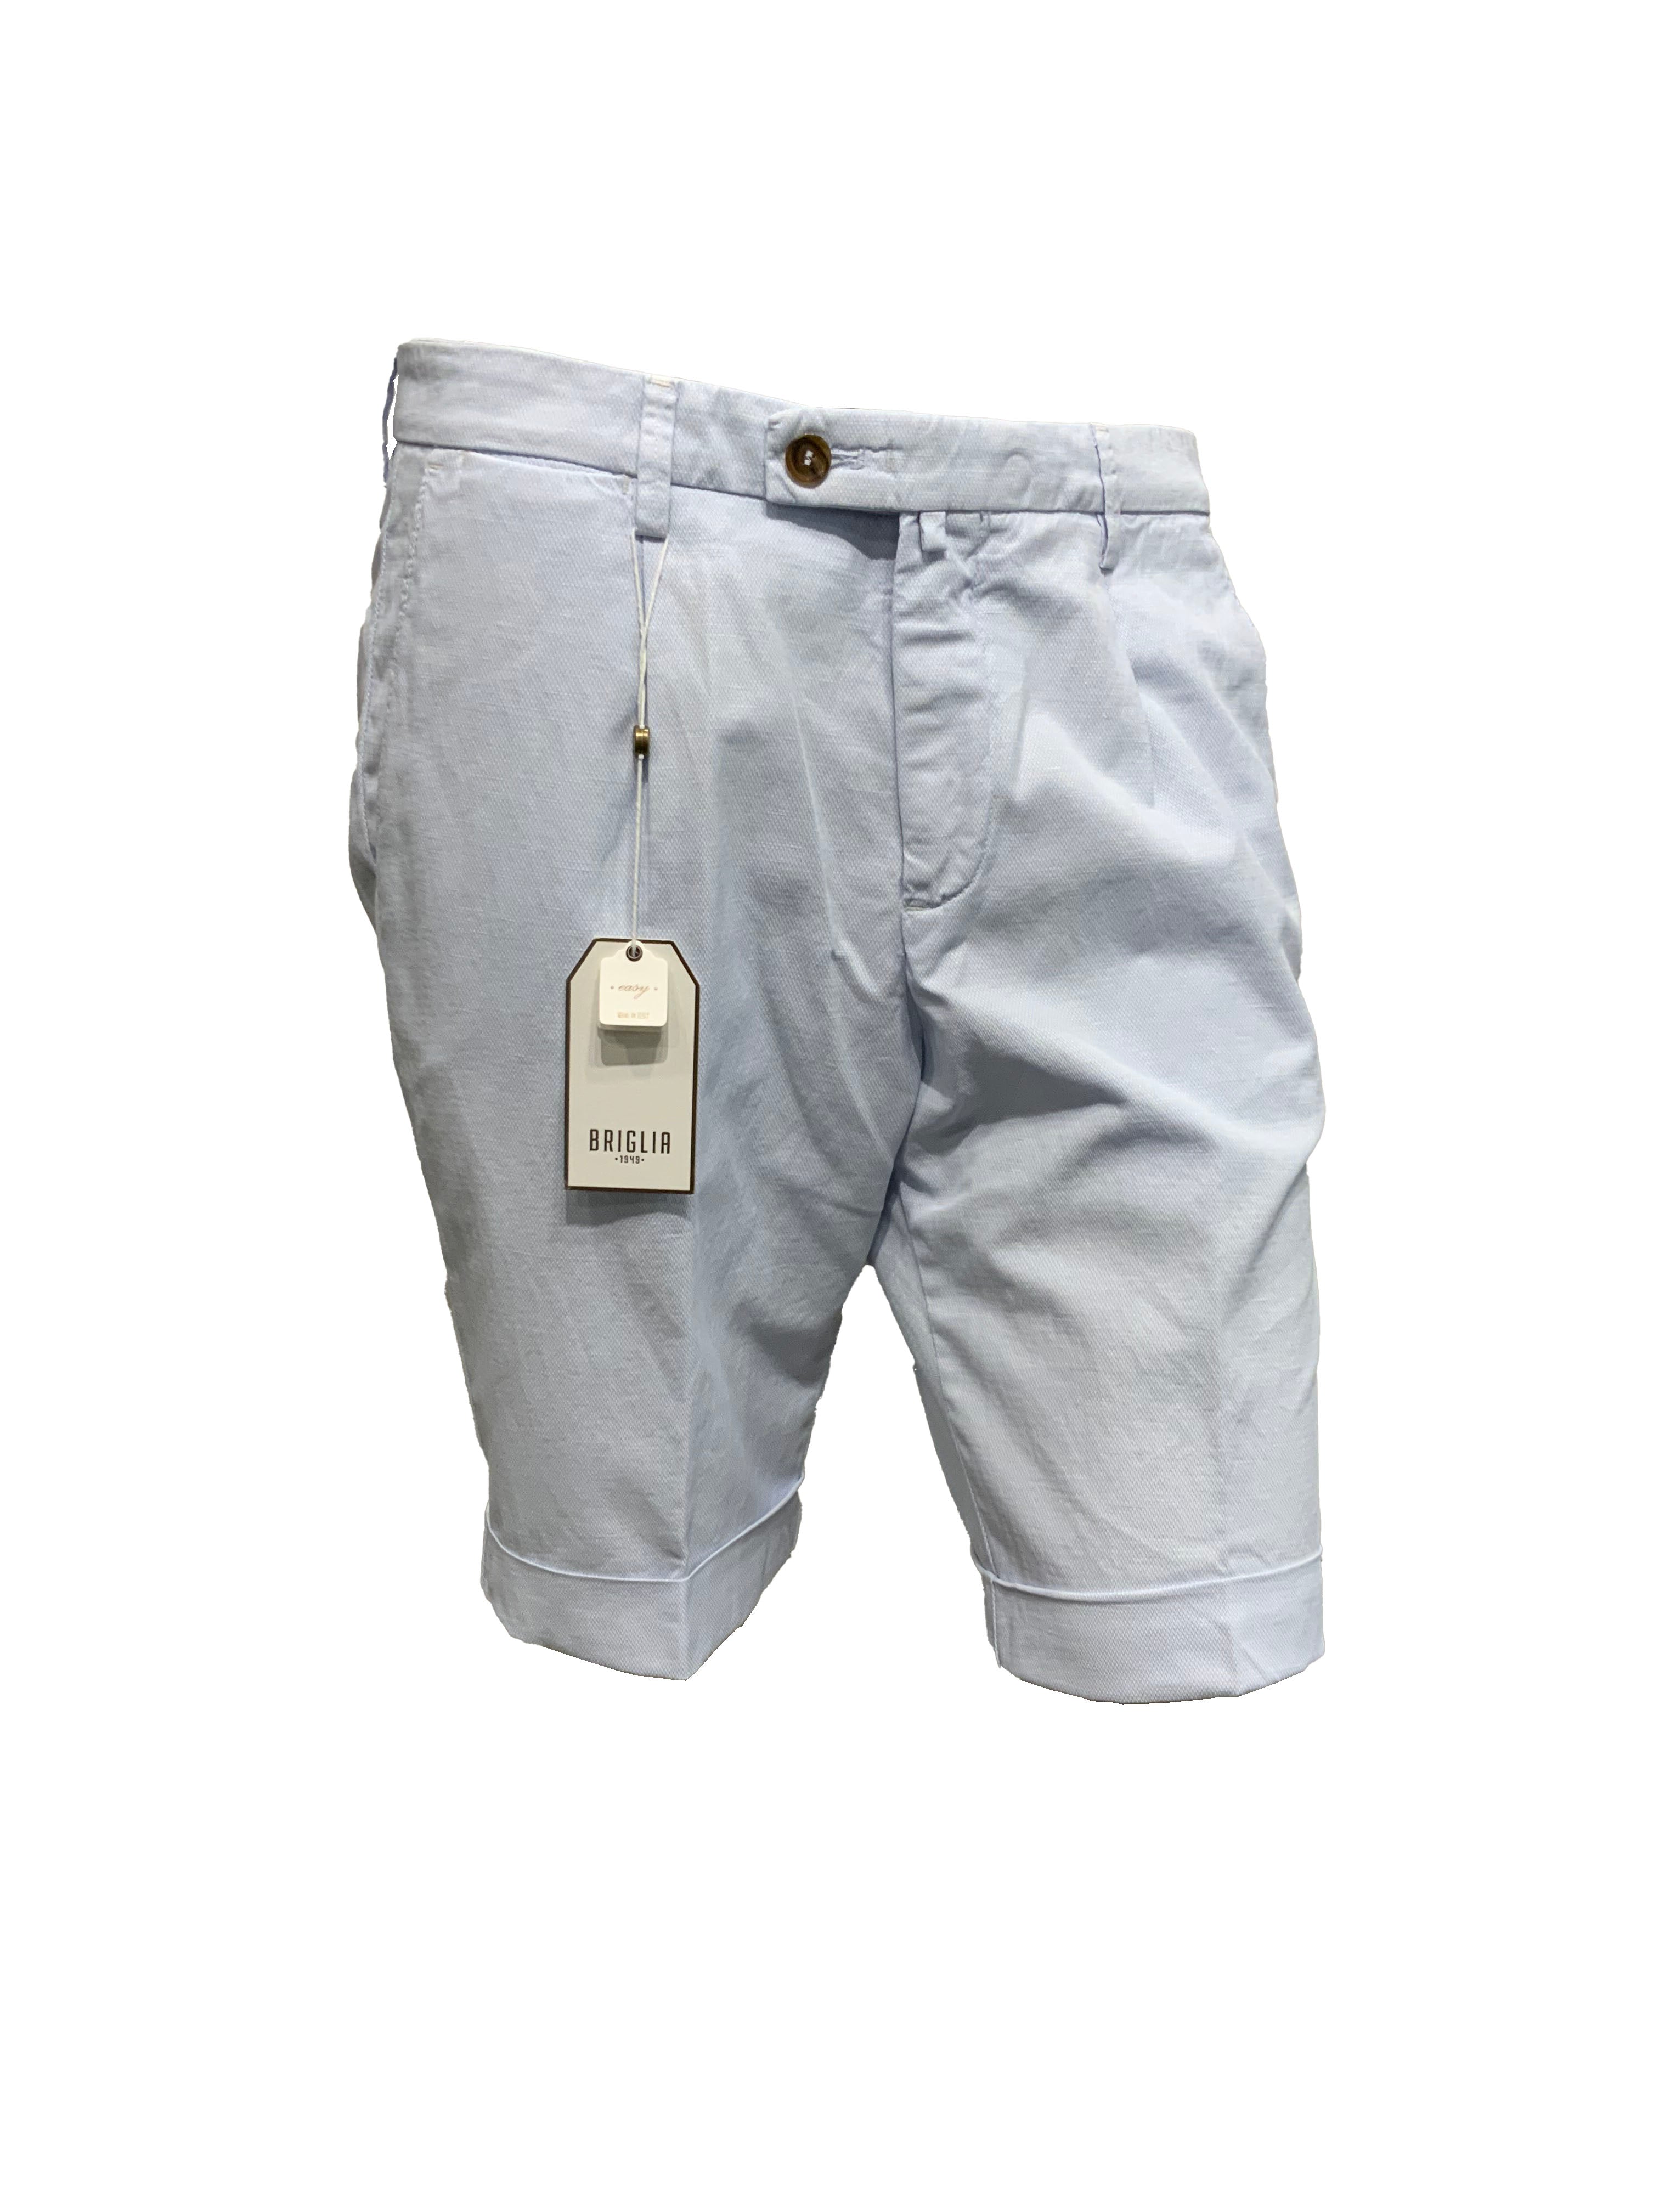 BRIGLIA 1949 - Sky Blue Stretch Cotton and Linen Blend Slim Fit Shorts BG101 324568 531